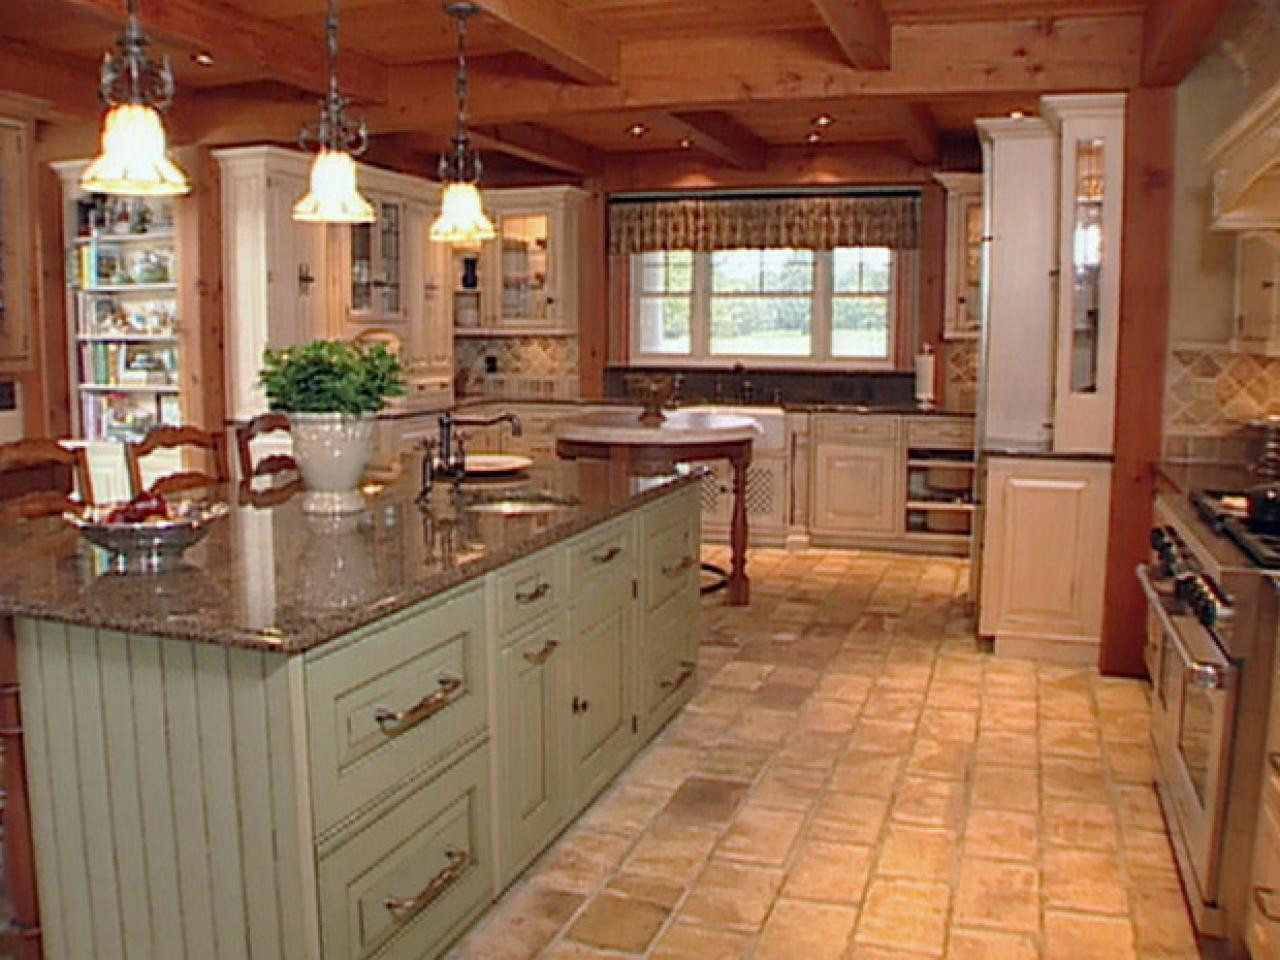 Farmhouse Kitchen Floor Tiles
 of Kitchen Design Ideas Remodel and Decor